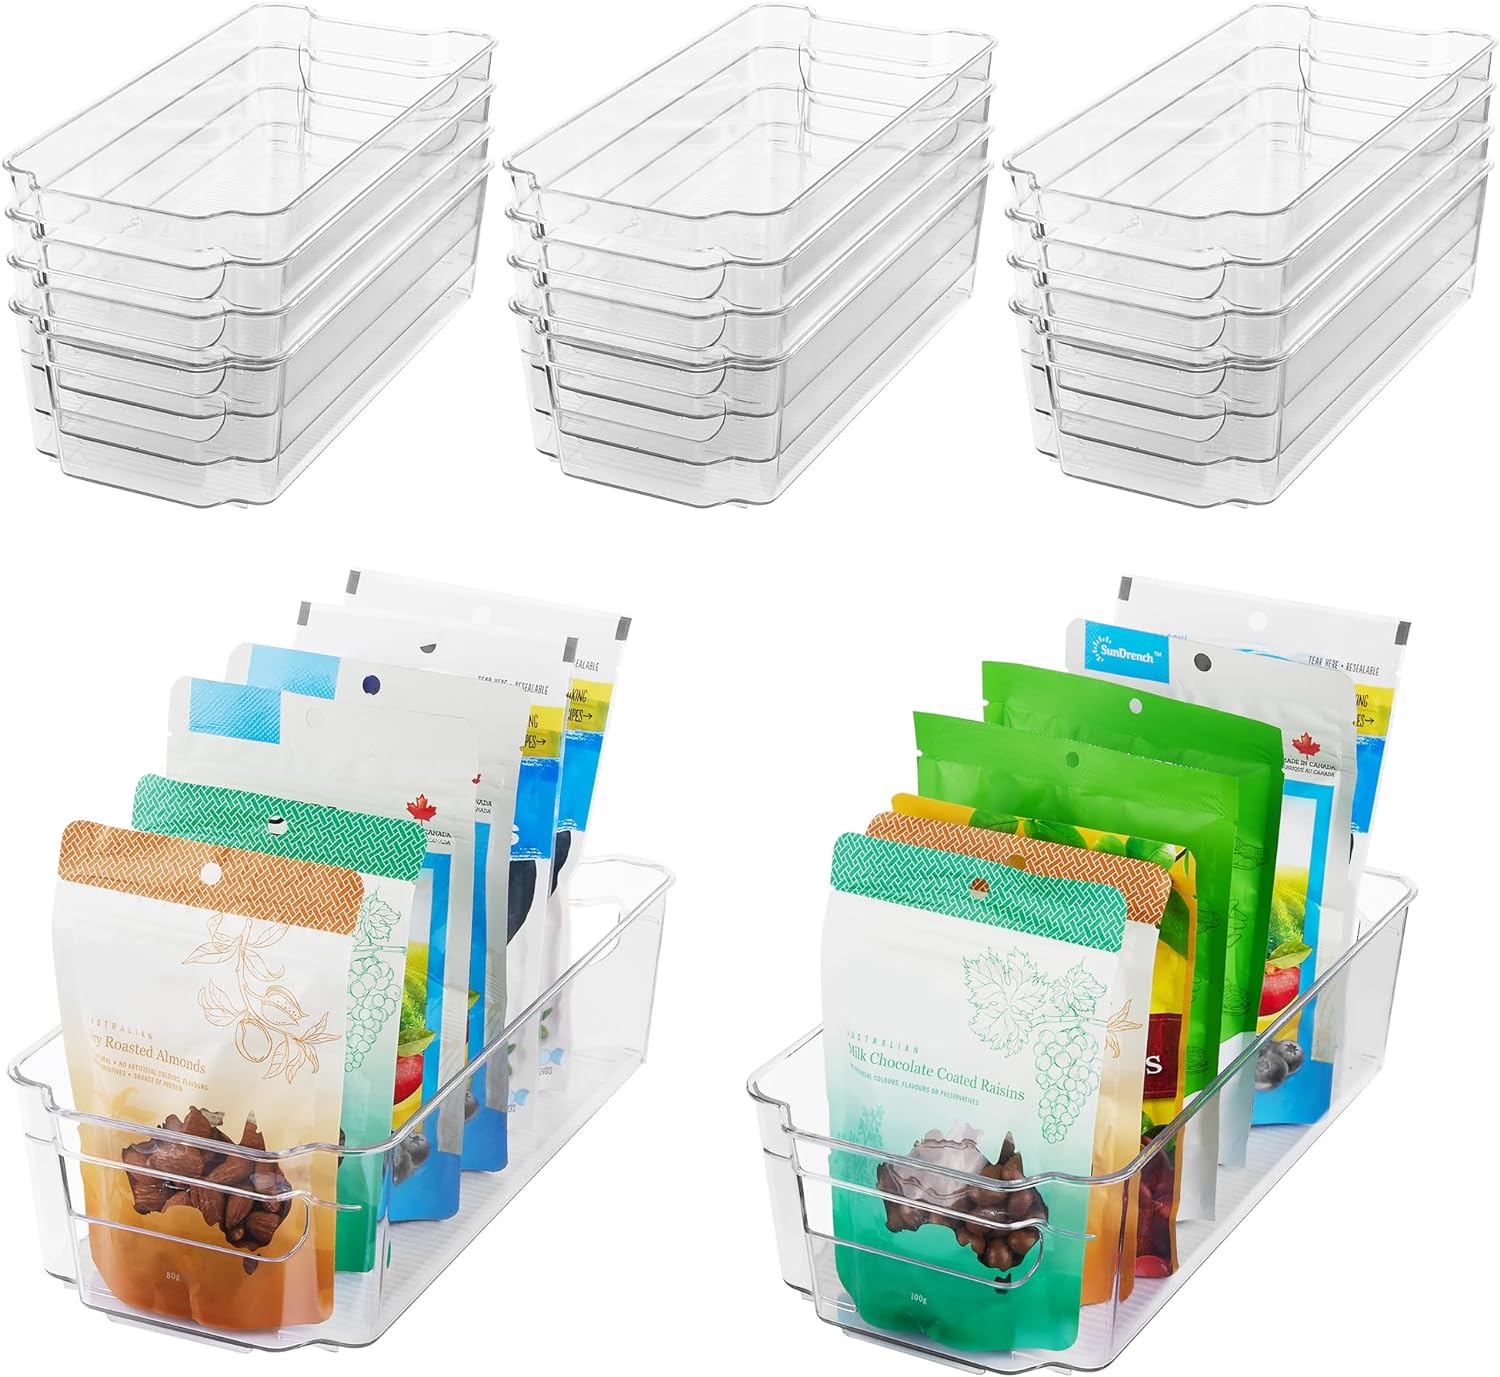 HOOJO Refrigerator Organizer Bins - 14pcs Clear Plastic Bins For Fridge, Freezer, Kitchen Cabinet, Pantry Organization and Storage, BPA Free Fridge Organizer, 12.5 Long-Medium